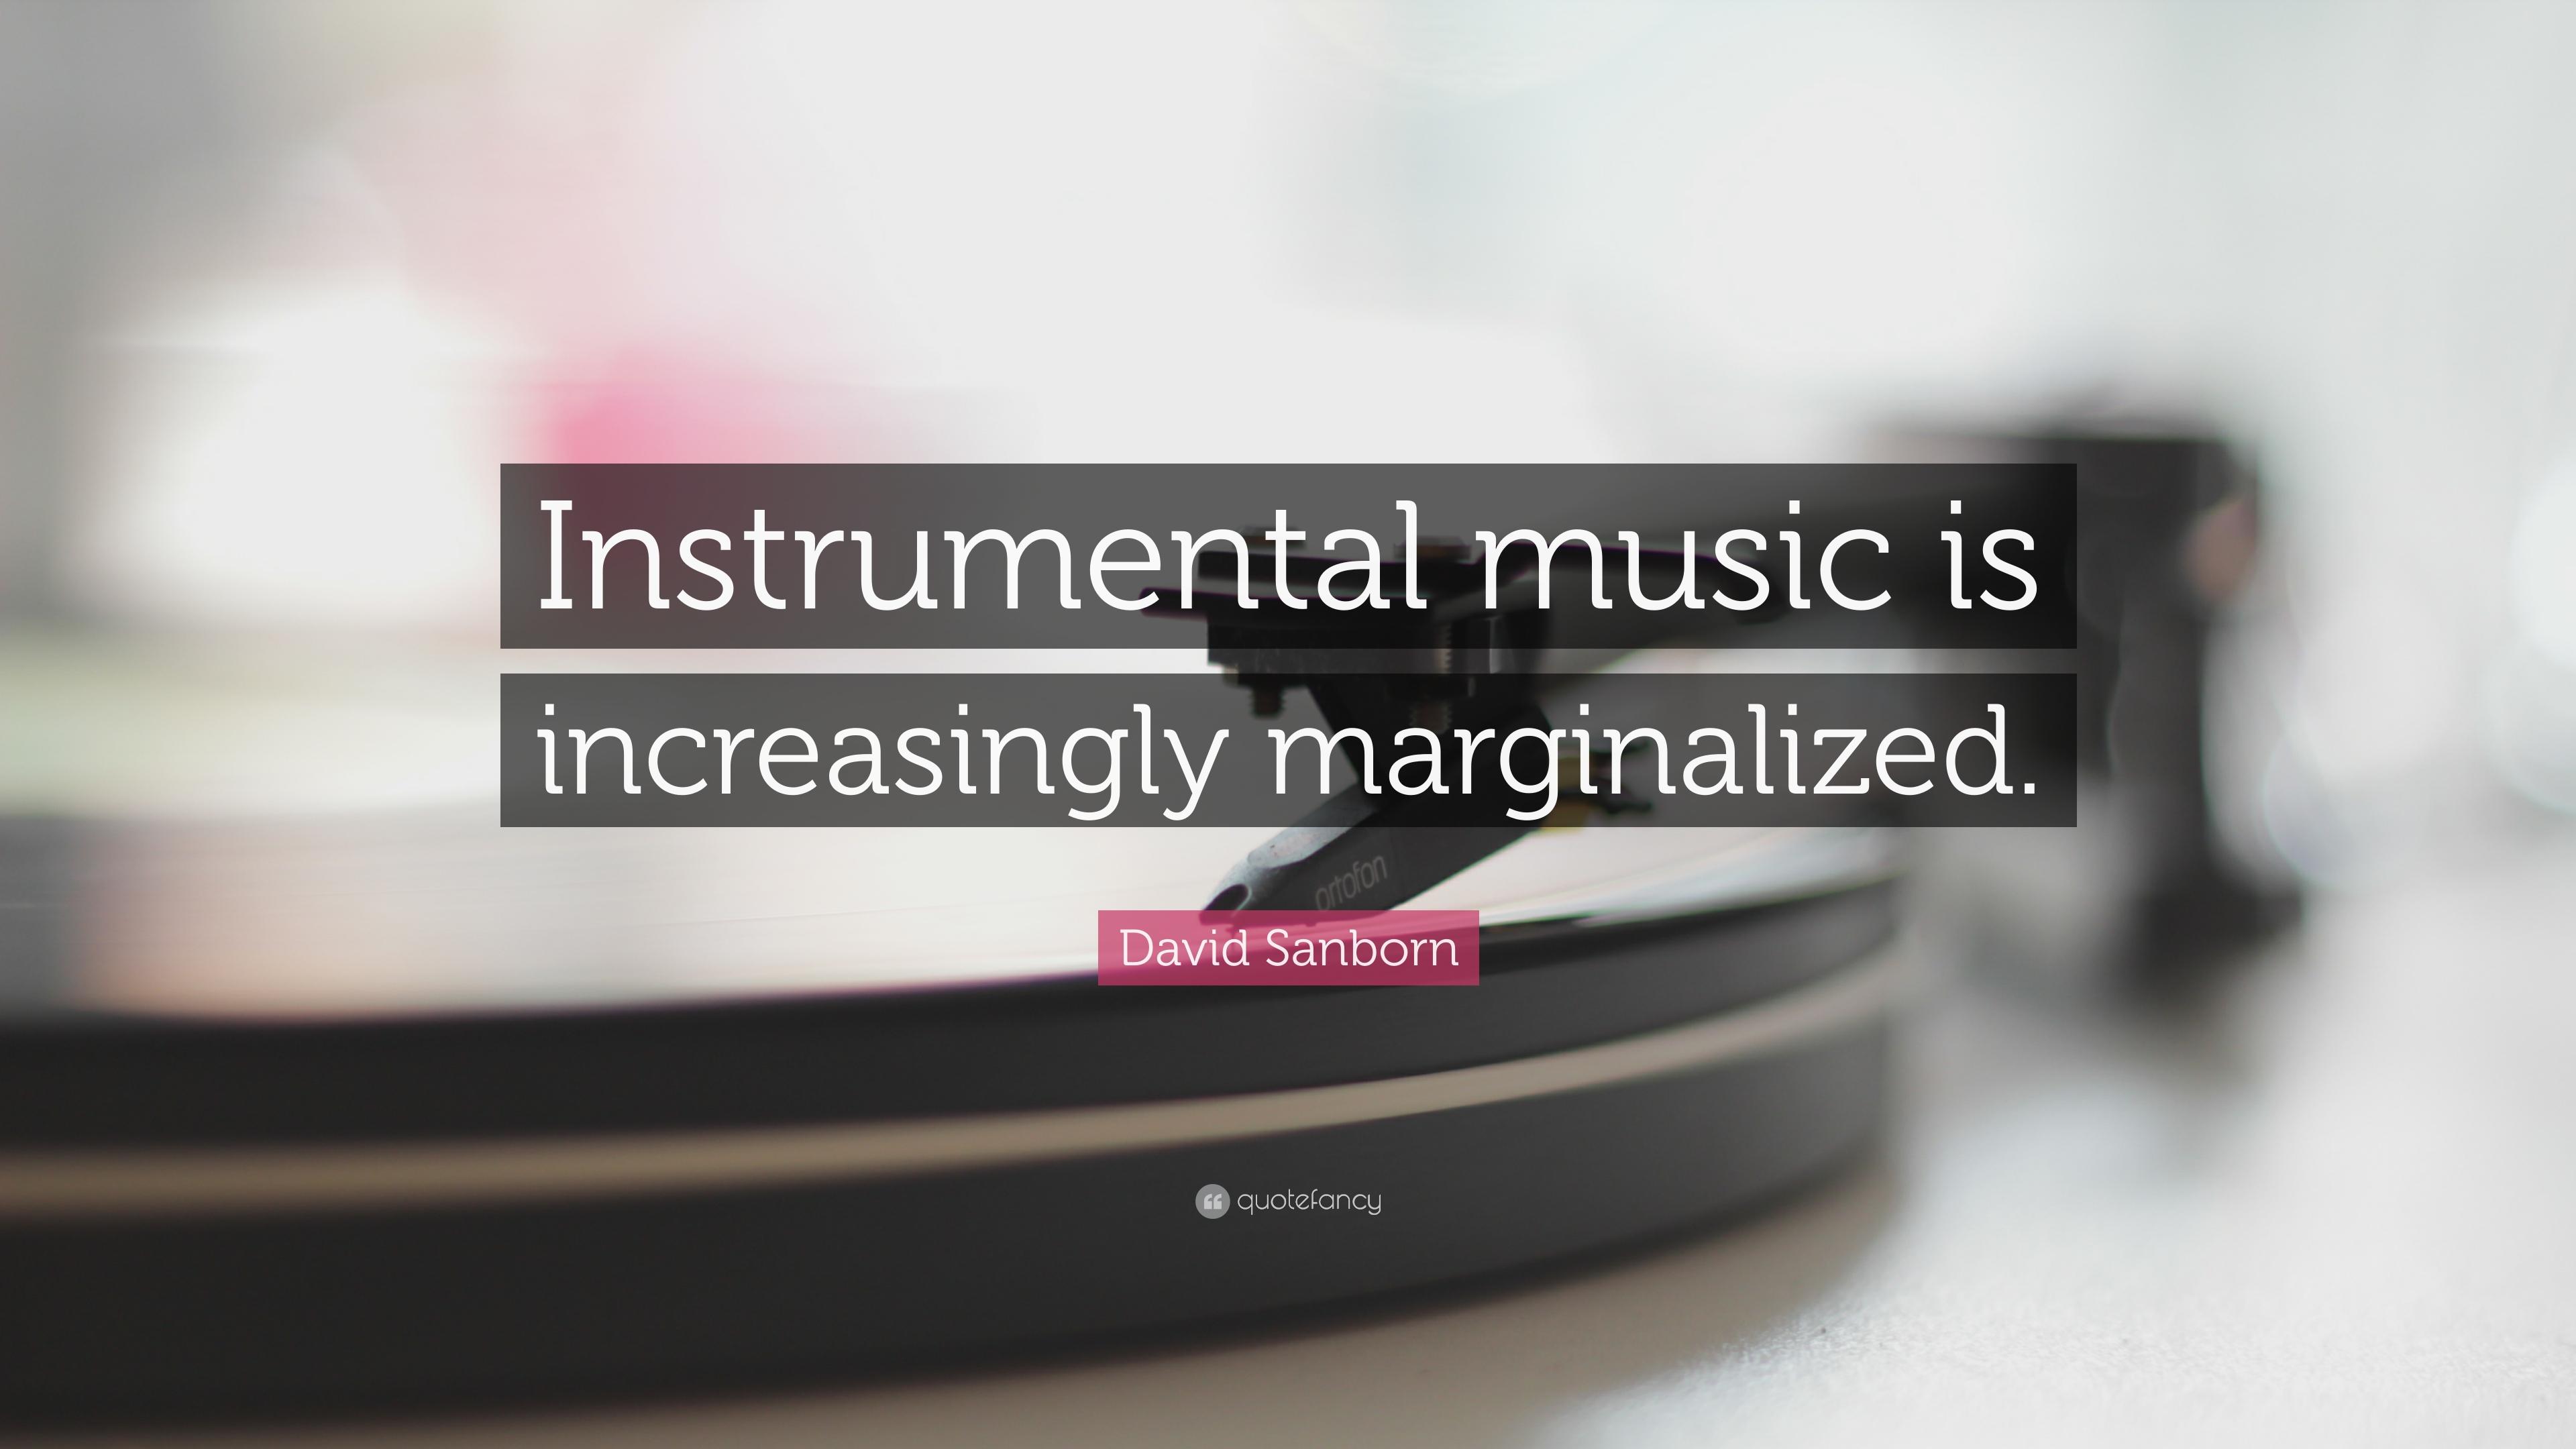 David Sanborn Quote: “Instrumental music is increasingly